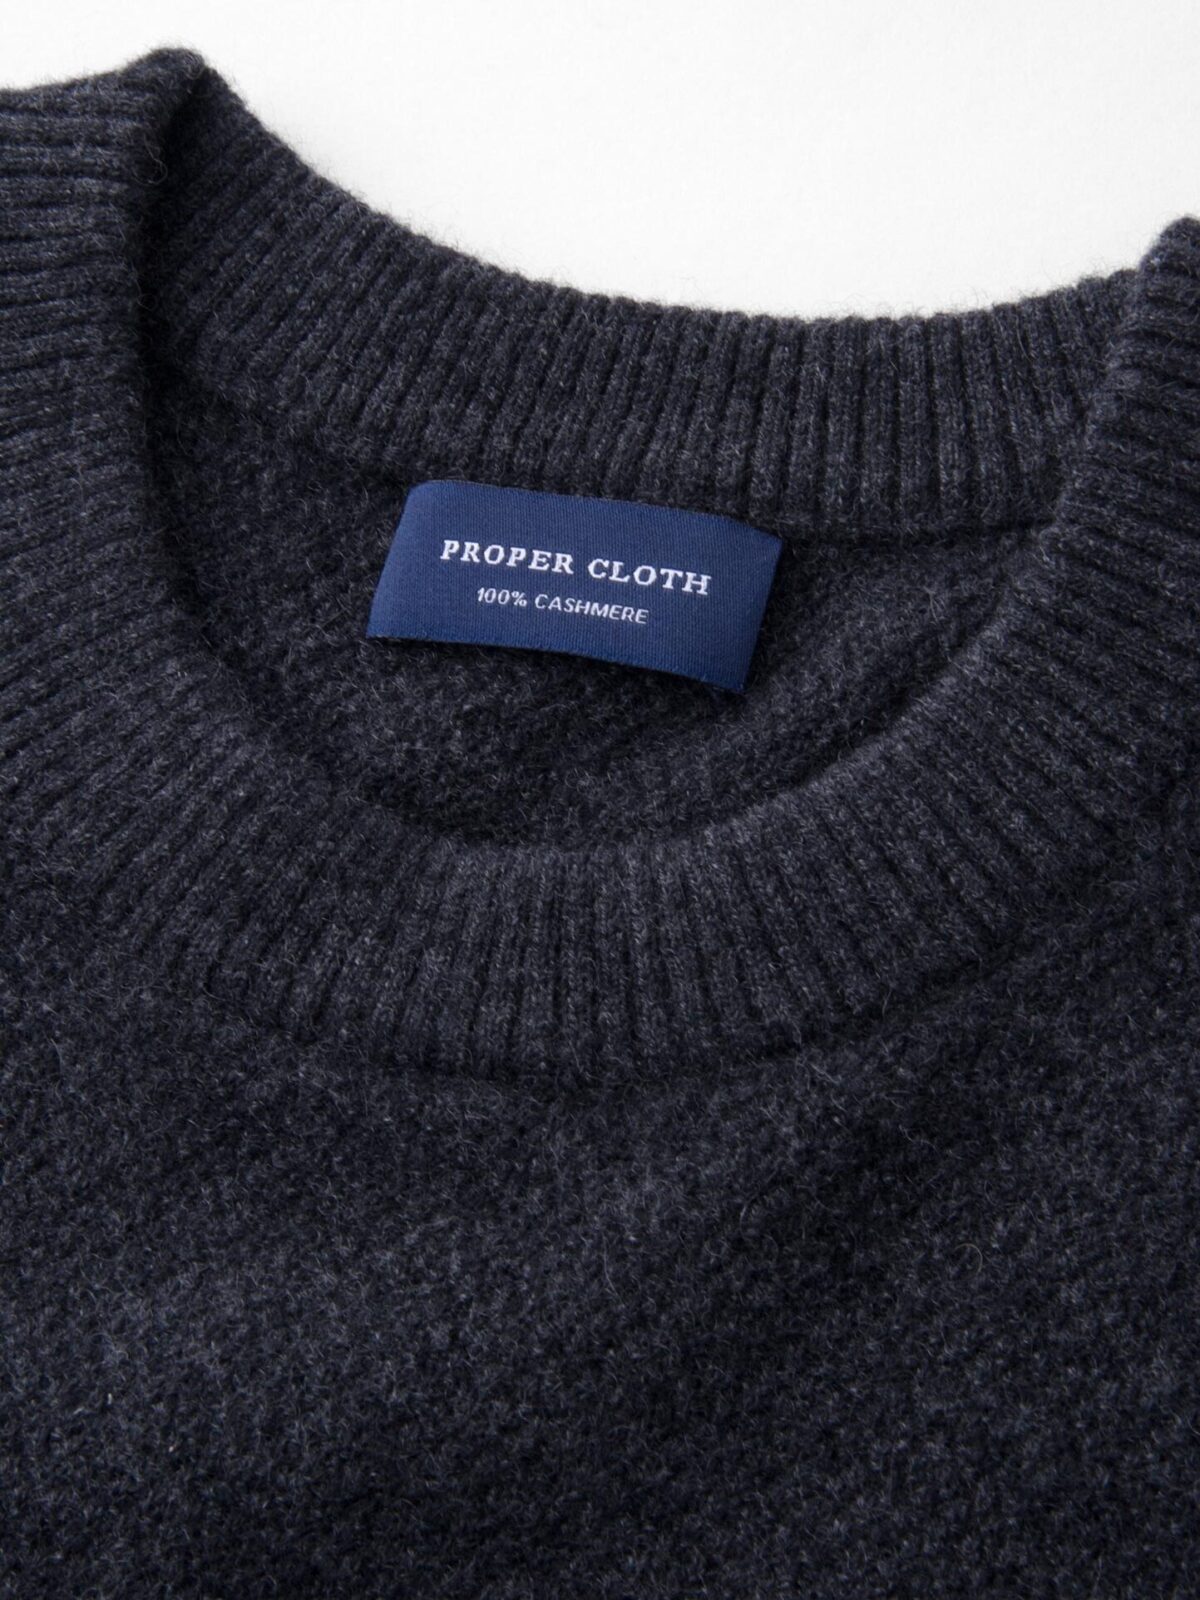 Charcoal Cobble Stitch Cashmere Crewneck Sweater